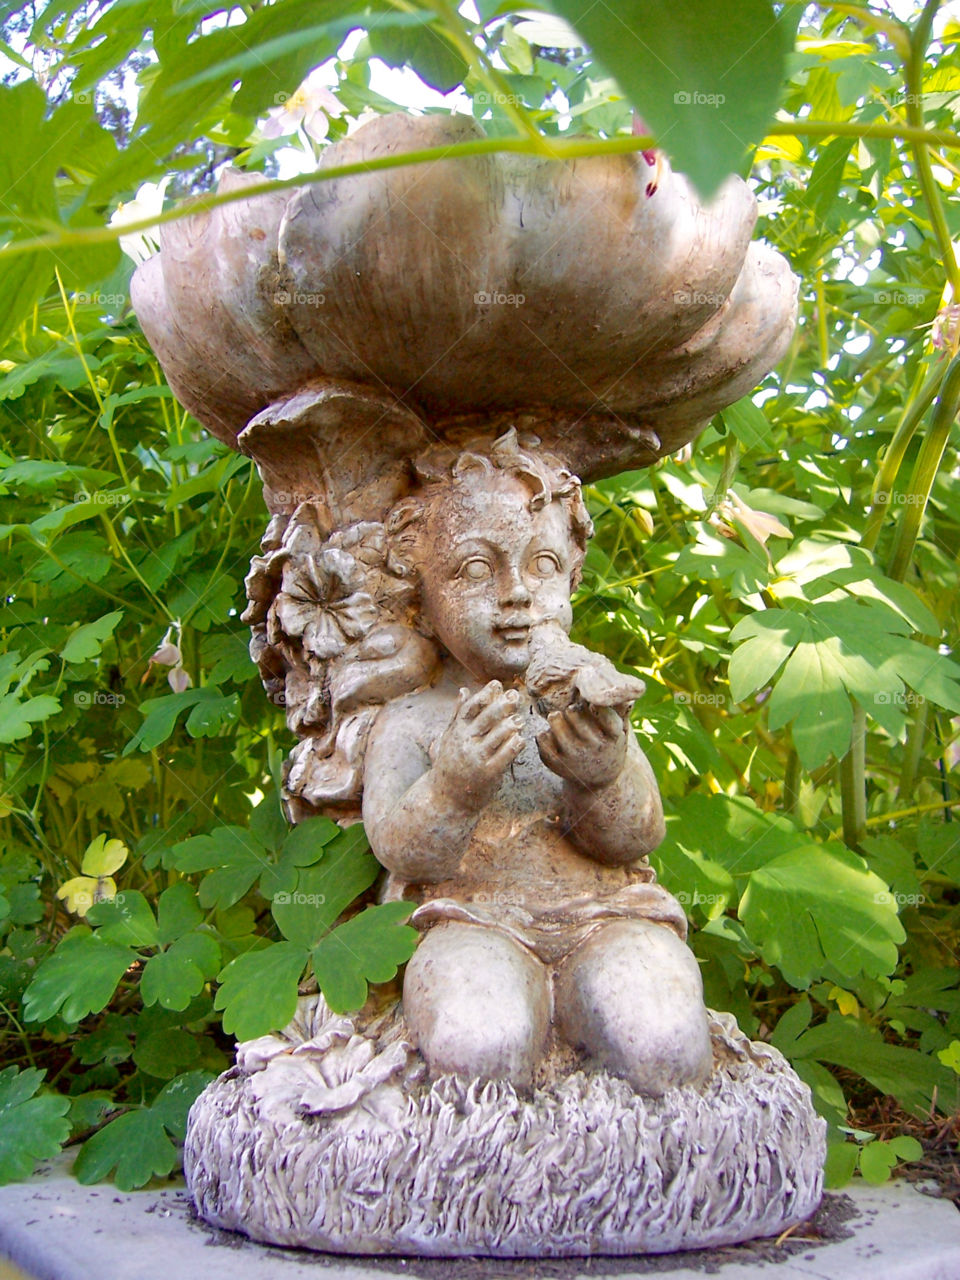 Stone garden statue in greenery